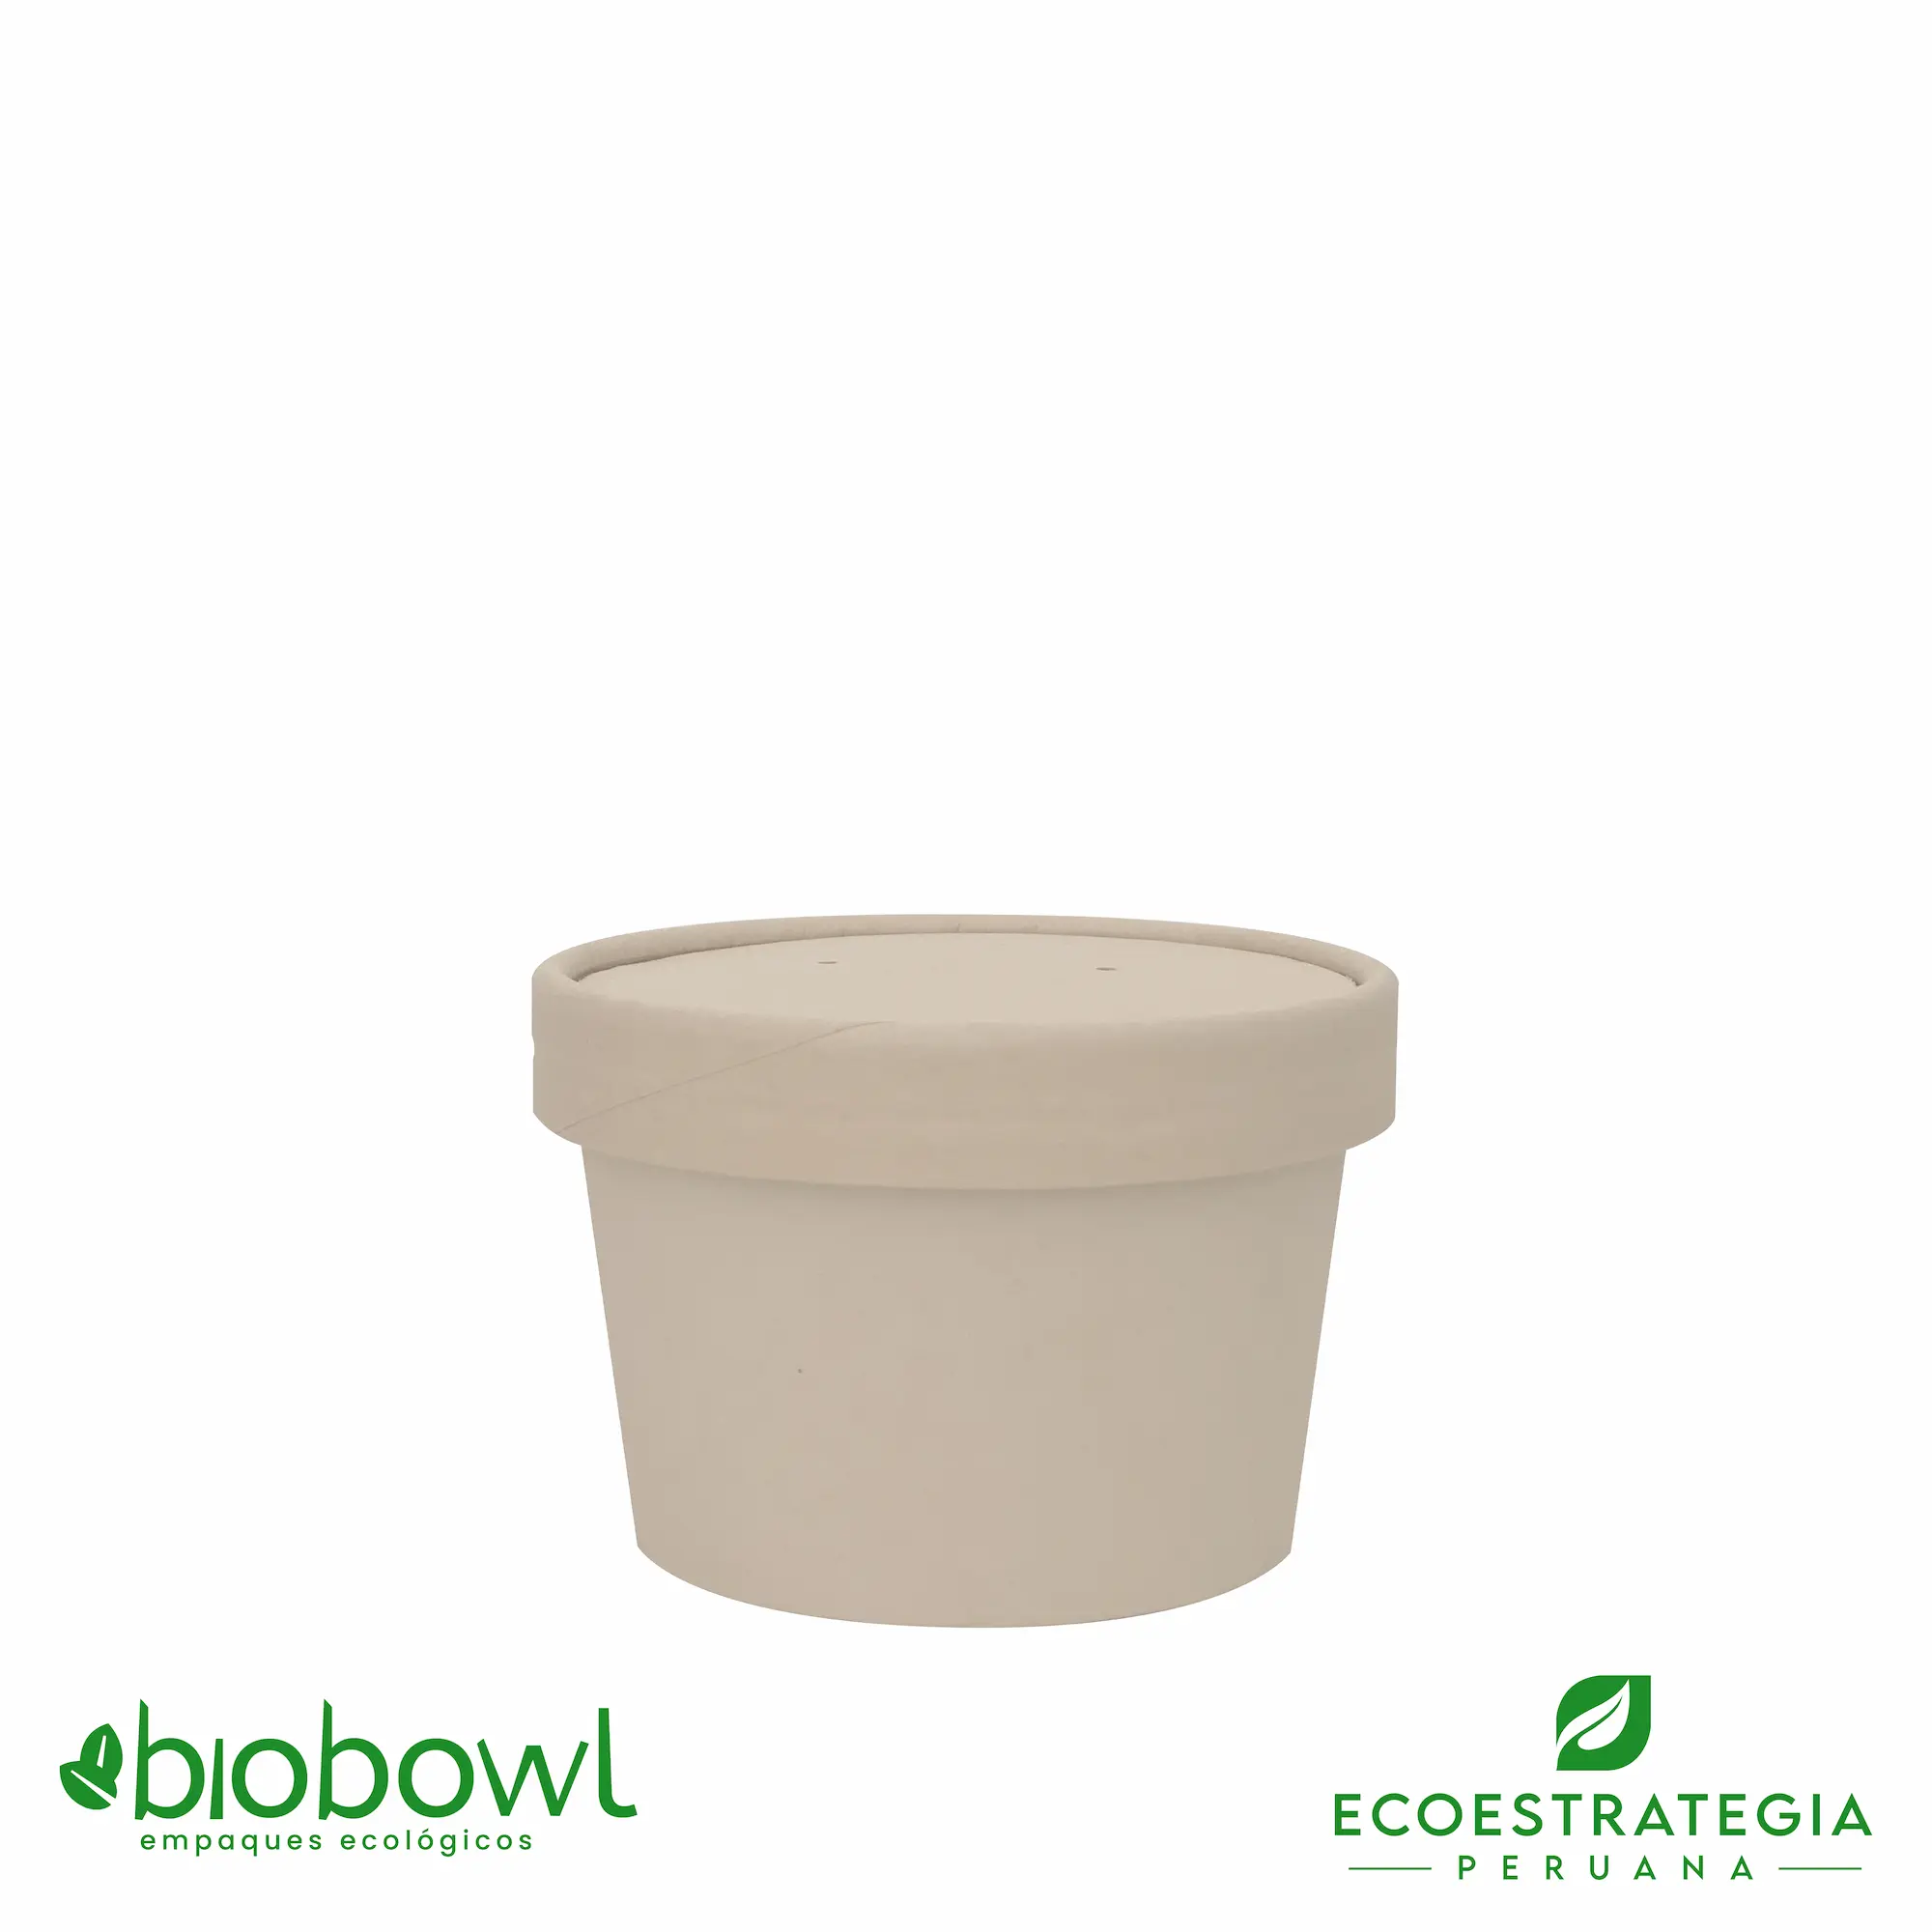 Este envase biodegradable es un bowl 8oz hecho de bambú. Envases descartables con gramaje ideal, cotiza tus vasos para helados, táper para sopa, bowls sopero